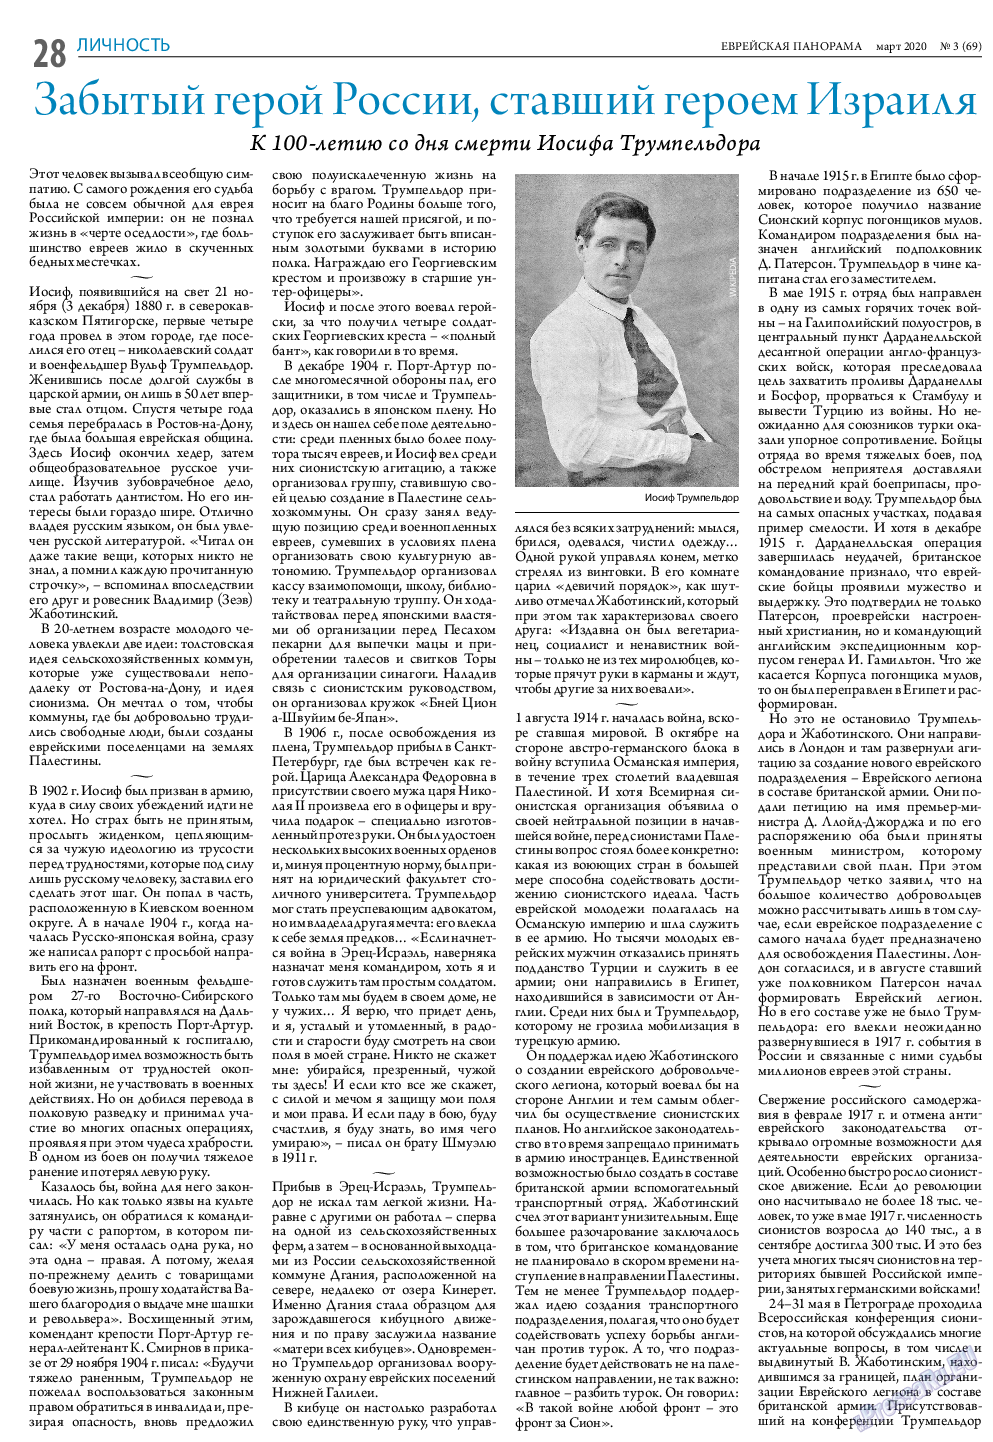 Еврейская панорама, газета. 2020 №3 стр.28